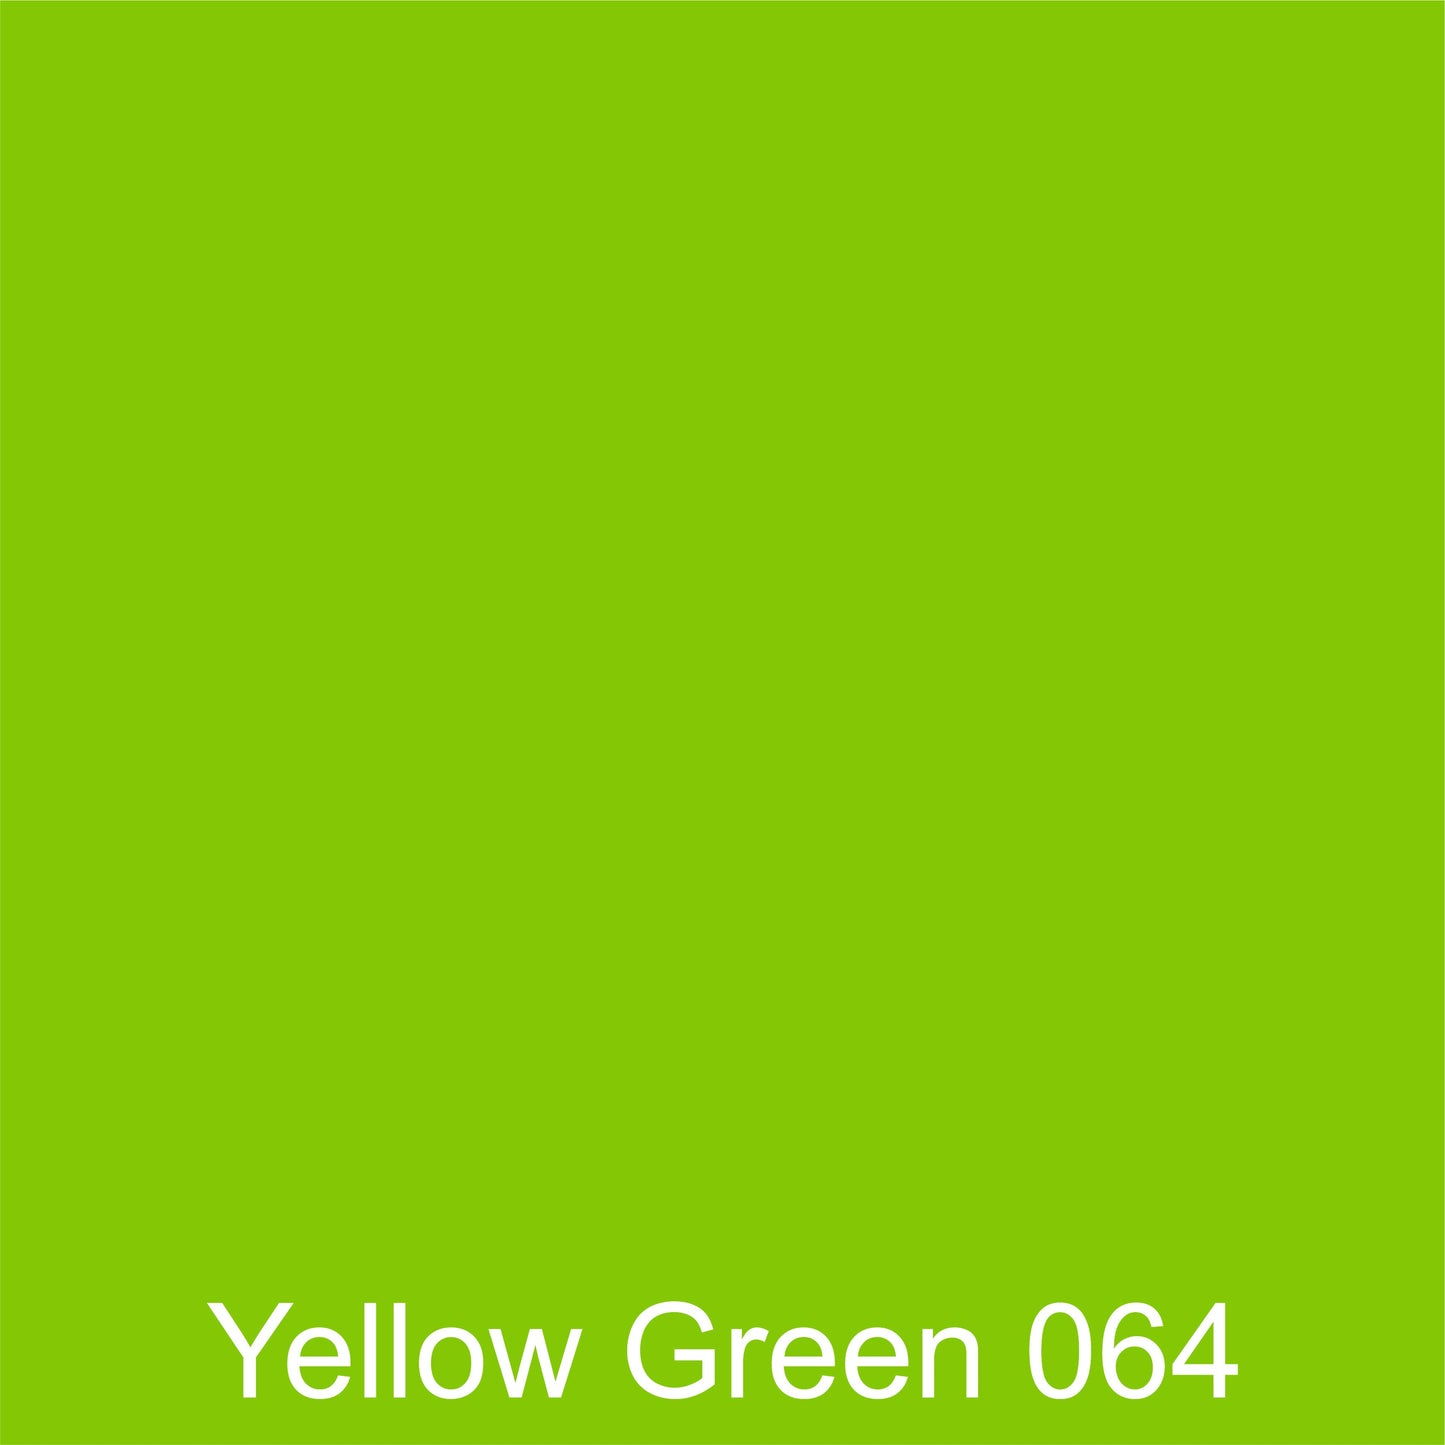 Oracal 651 Gloss :- Yellow Green - 064 - 300mm x 10 Metres